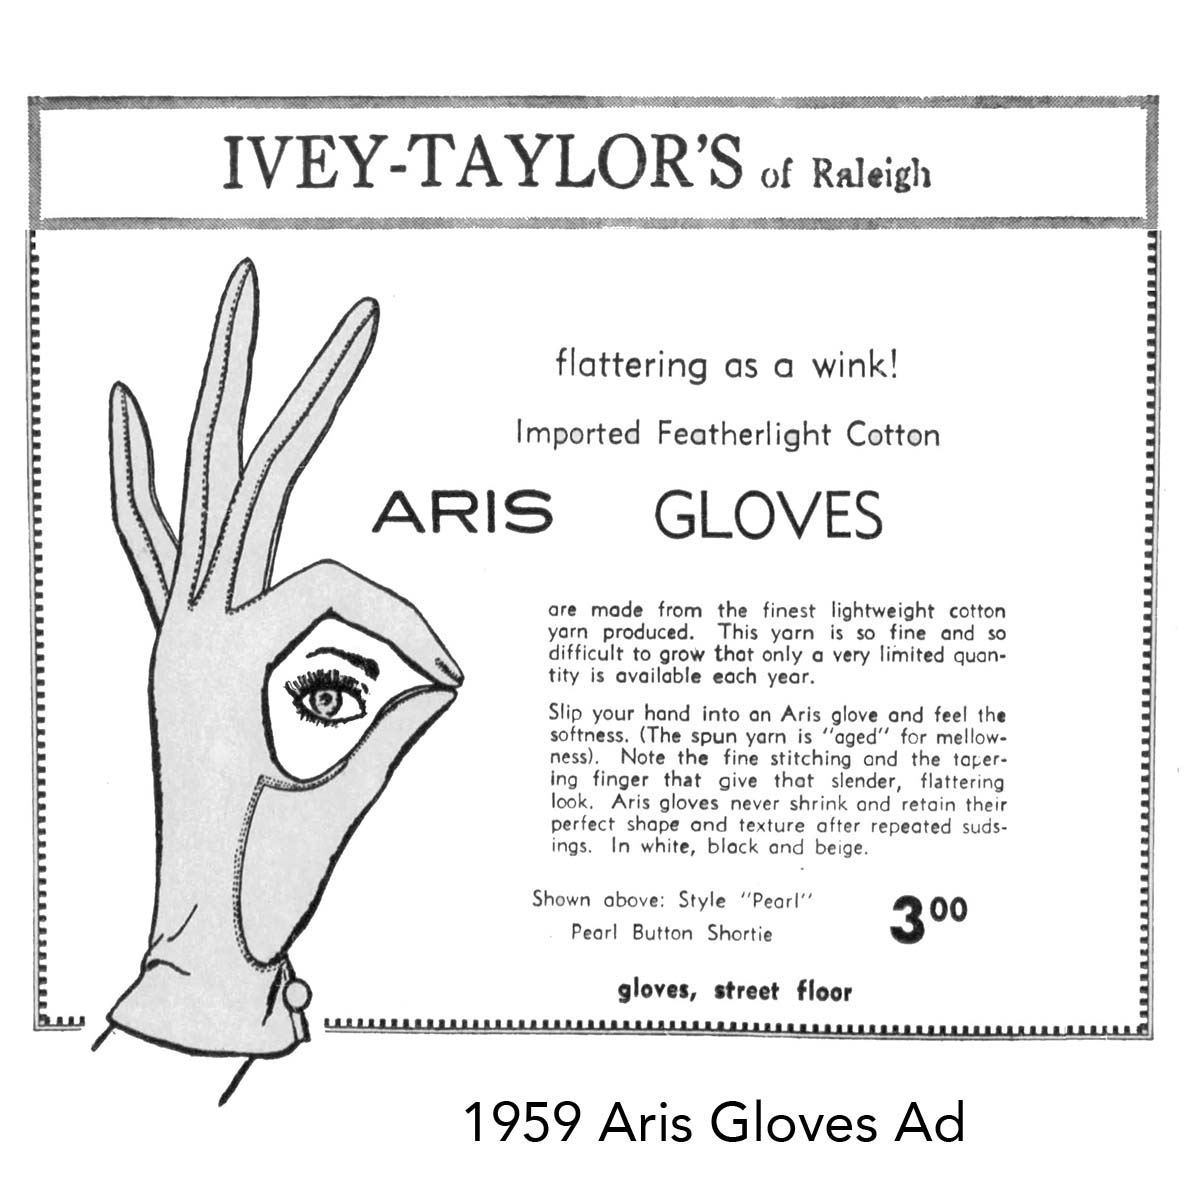 Aris gloves advertisement 1959